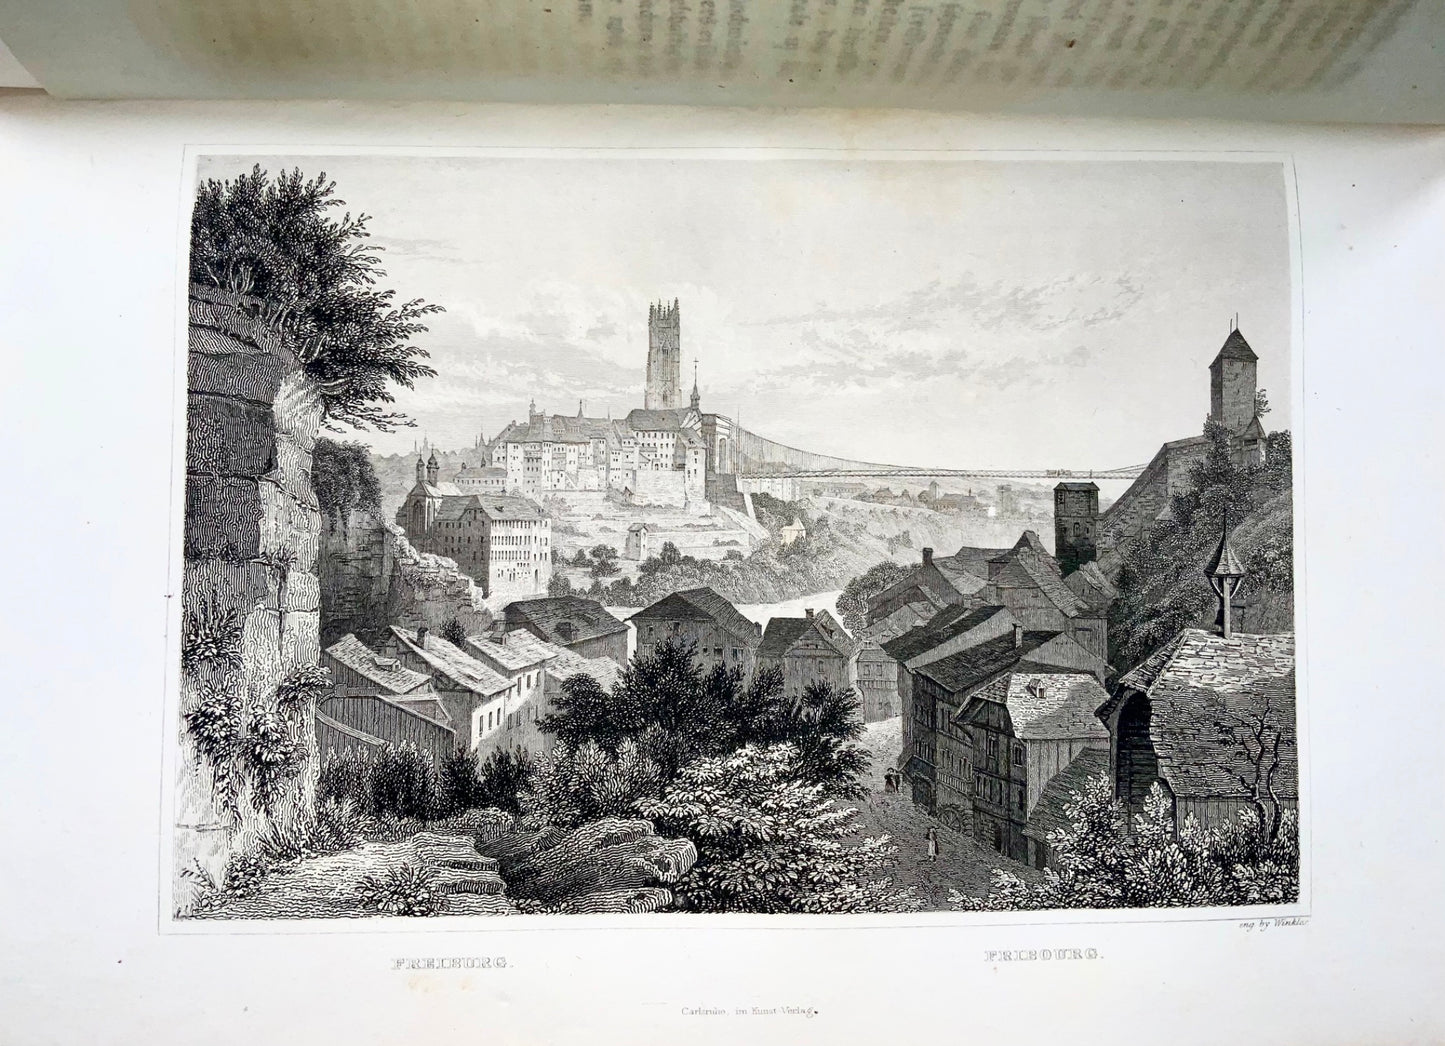 1836-8 H. Zschokke, Switzerland in 85 steel engravings, 4to, 2 vols